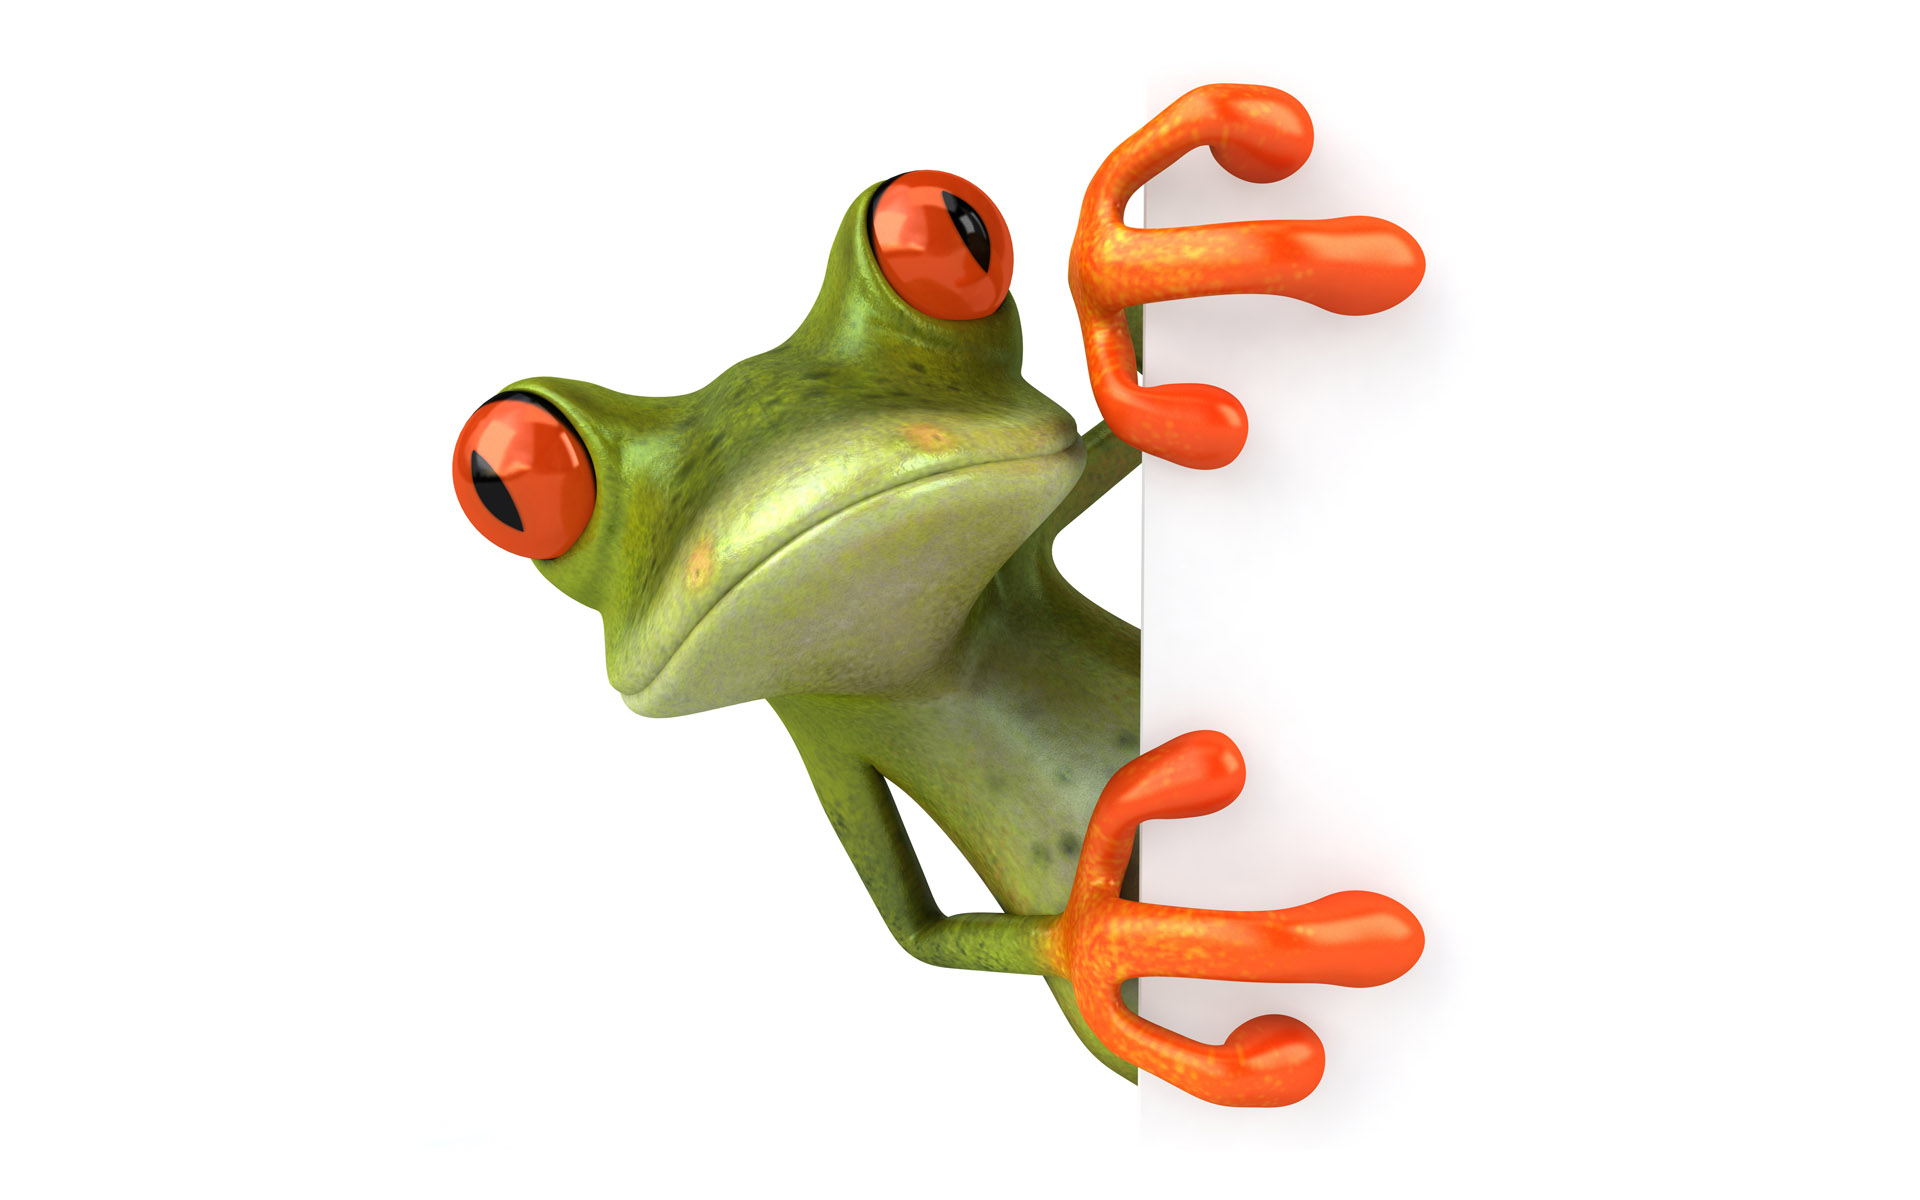 Free frog 3d wallpaper for desktop Wallpapers   HD Wallpapers 81218